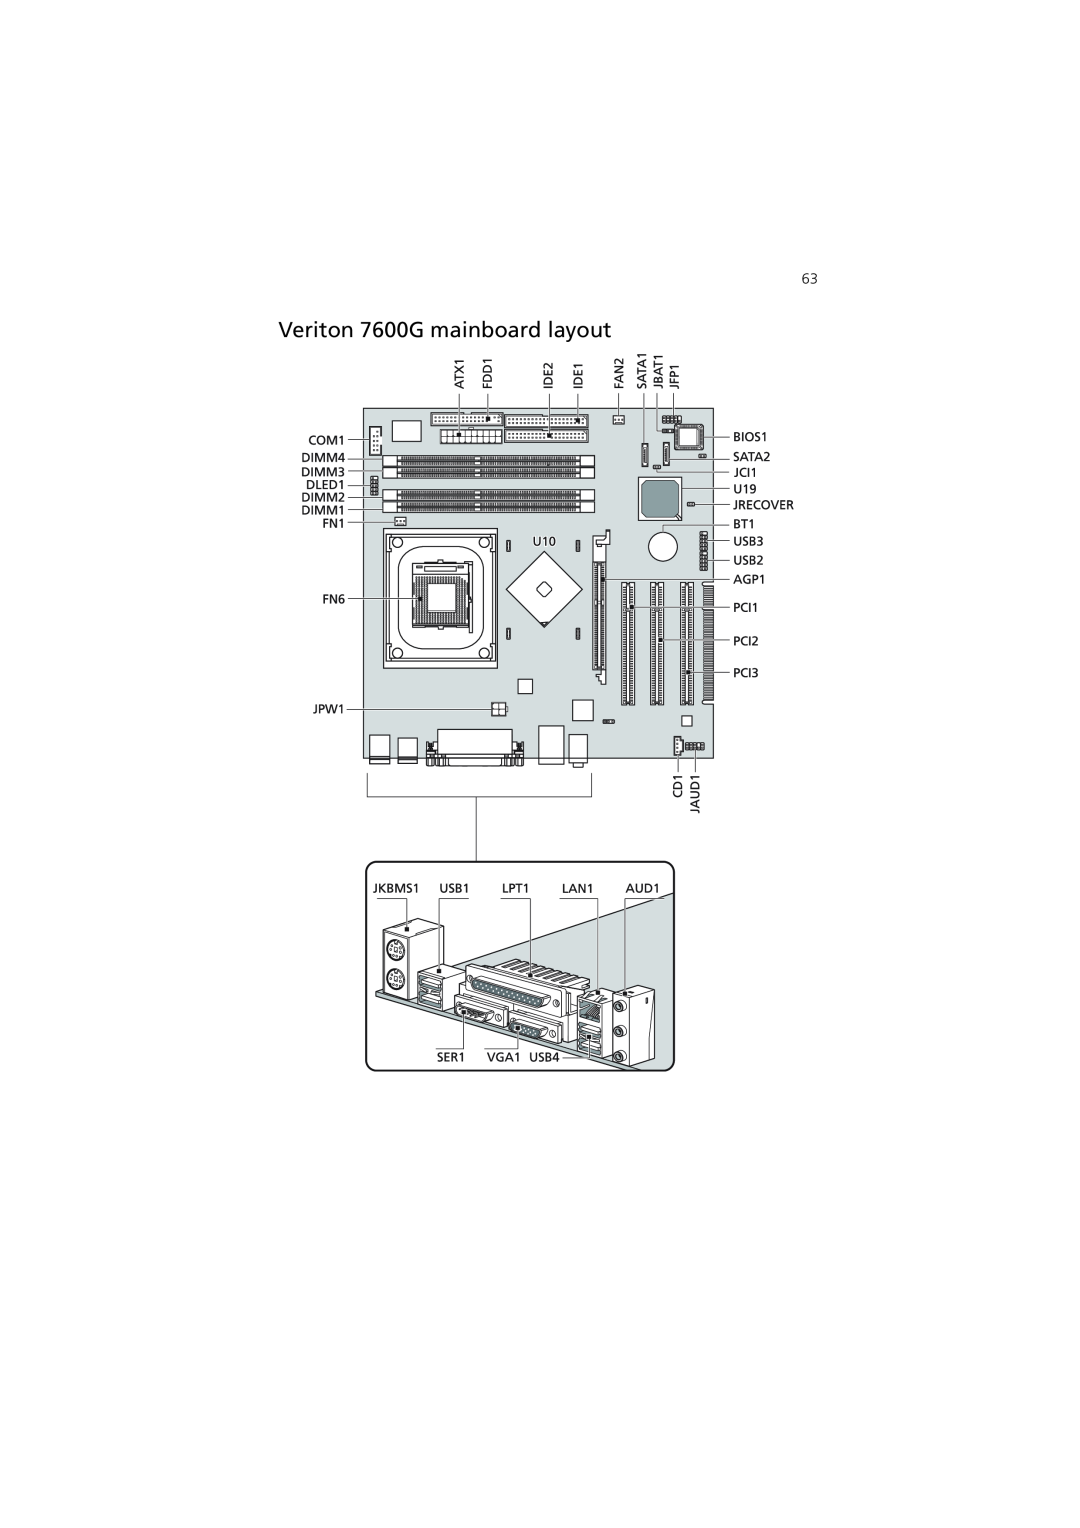 Acer manual Veriton 7600G mainboard layout 